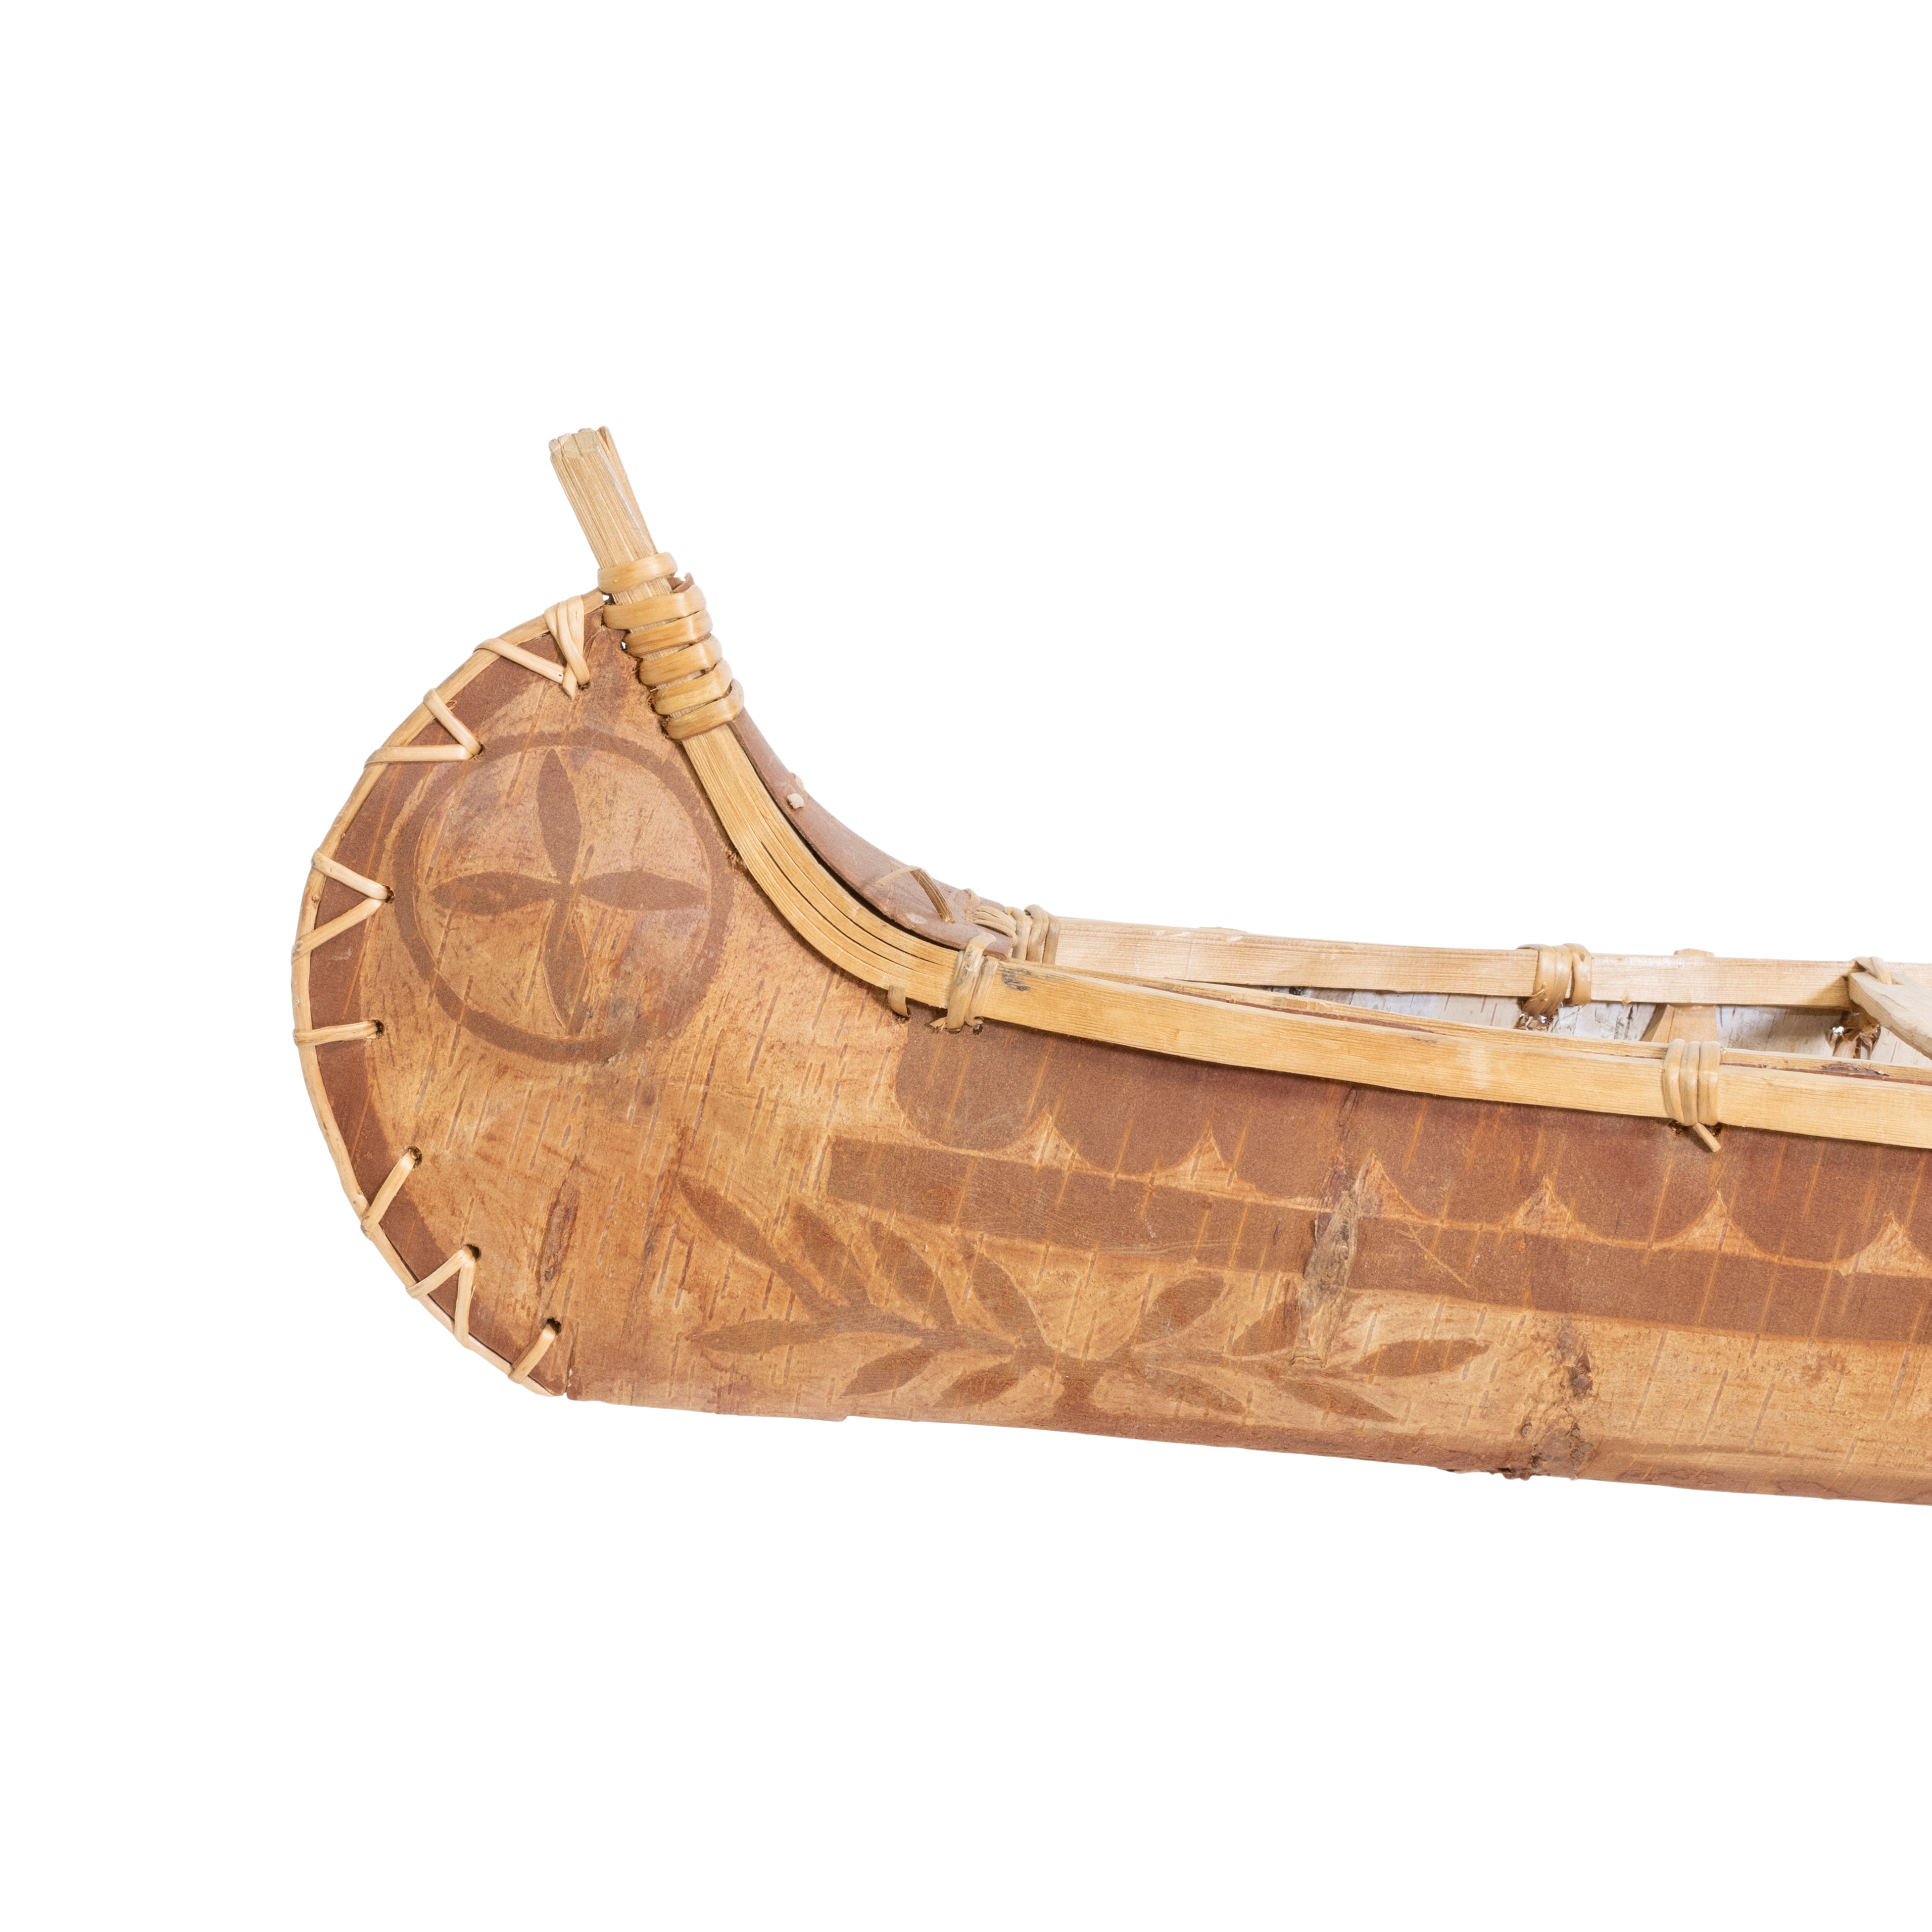 Algonquin Birch Bark Canoe